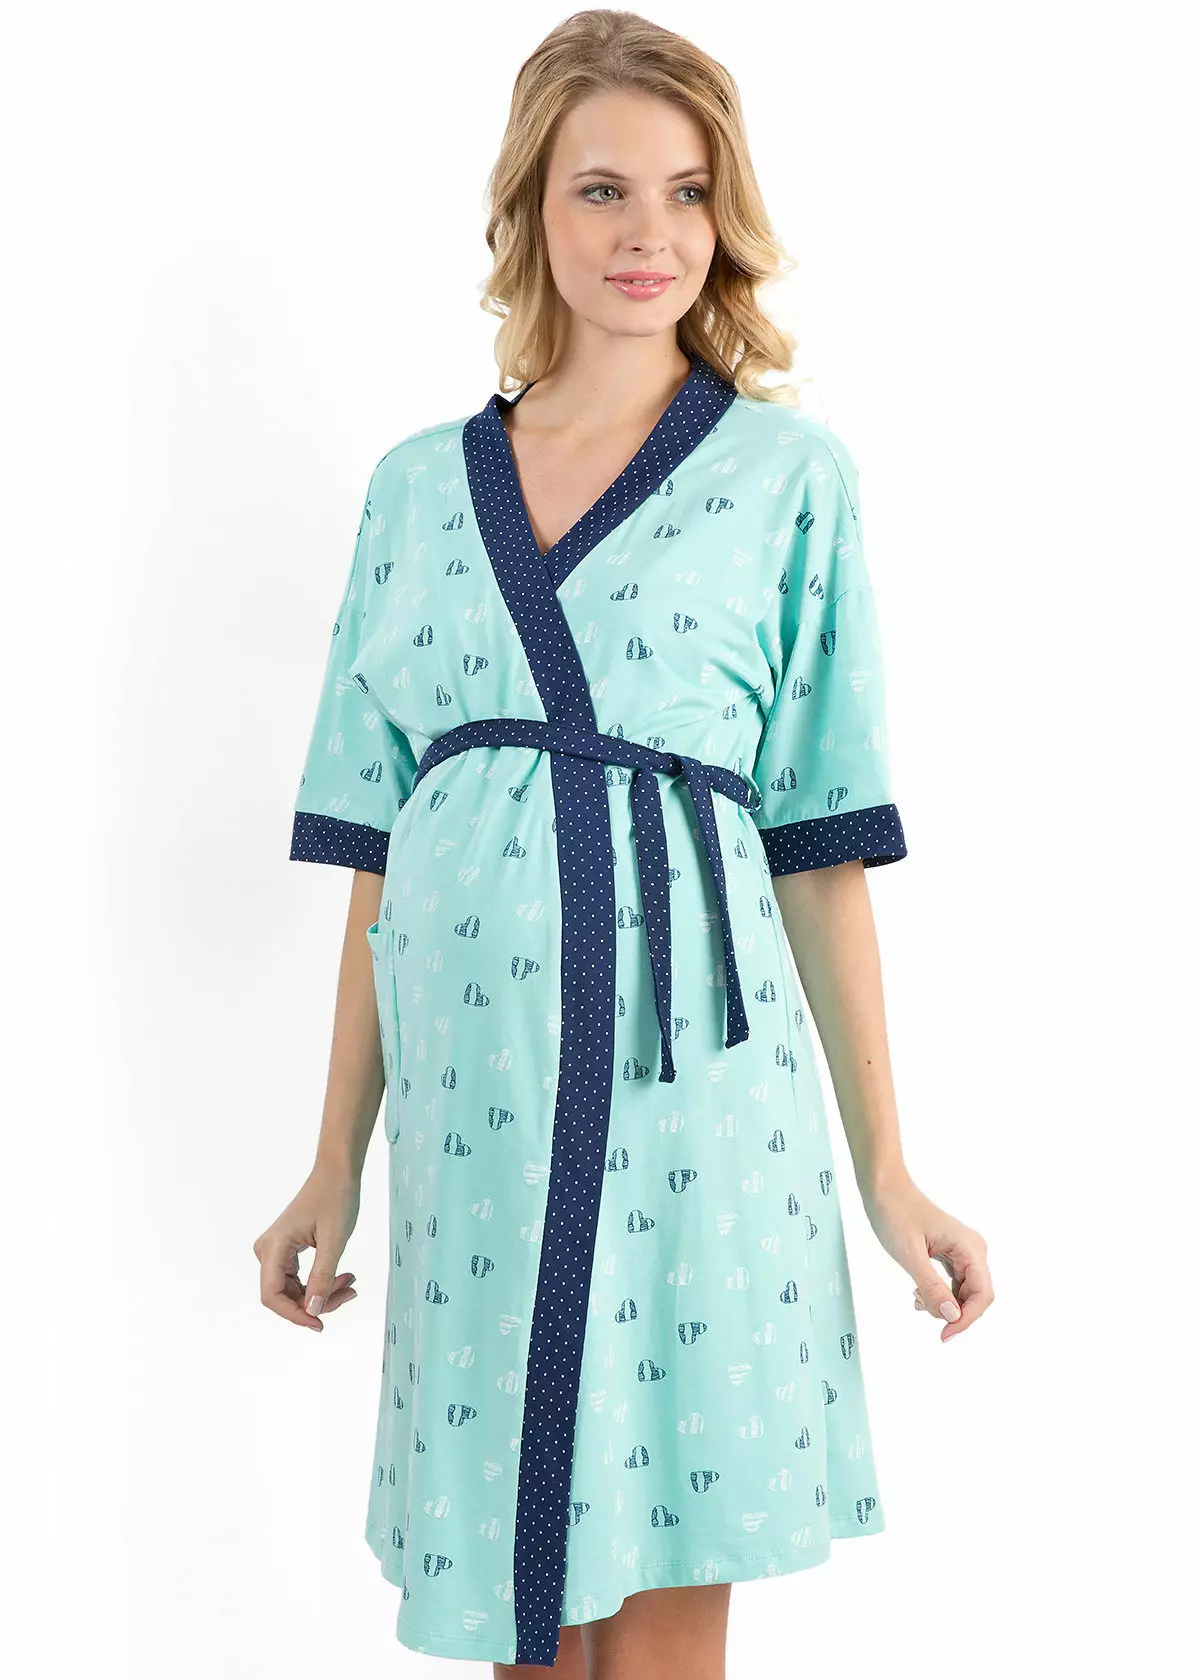 Set of bathrobe and shirt 64 photos: stylish night female models, for nursing mothers, knitted 1631_58